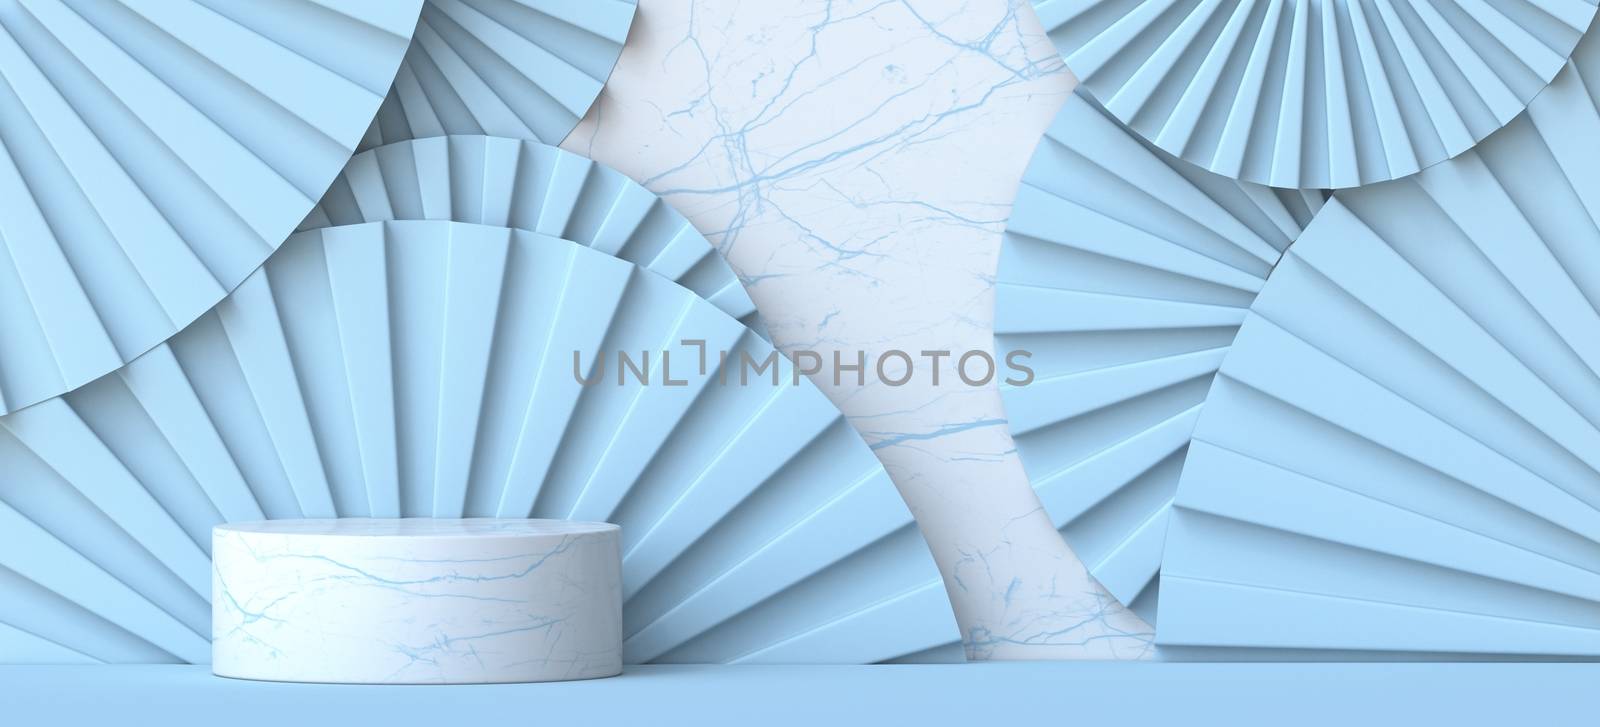 Mock up podium for product presentation with decorative hand fans 3D render illustration on blue background